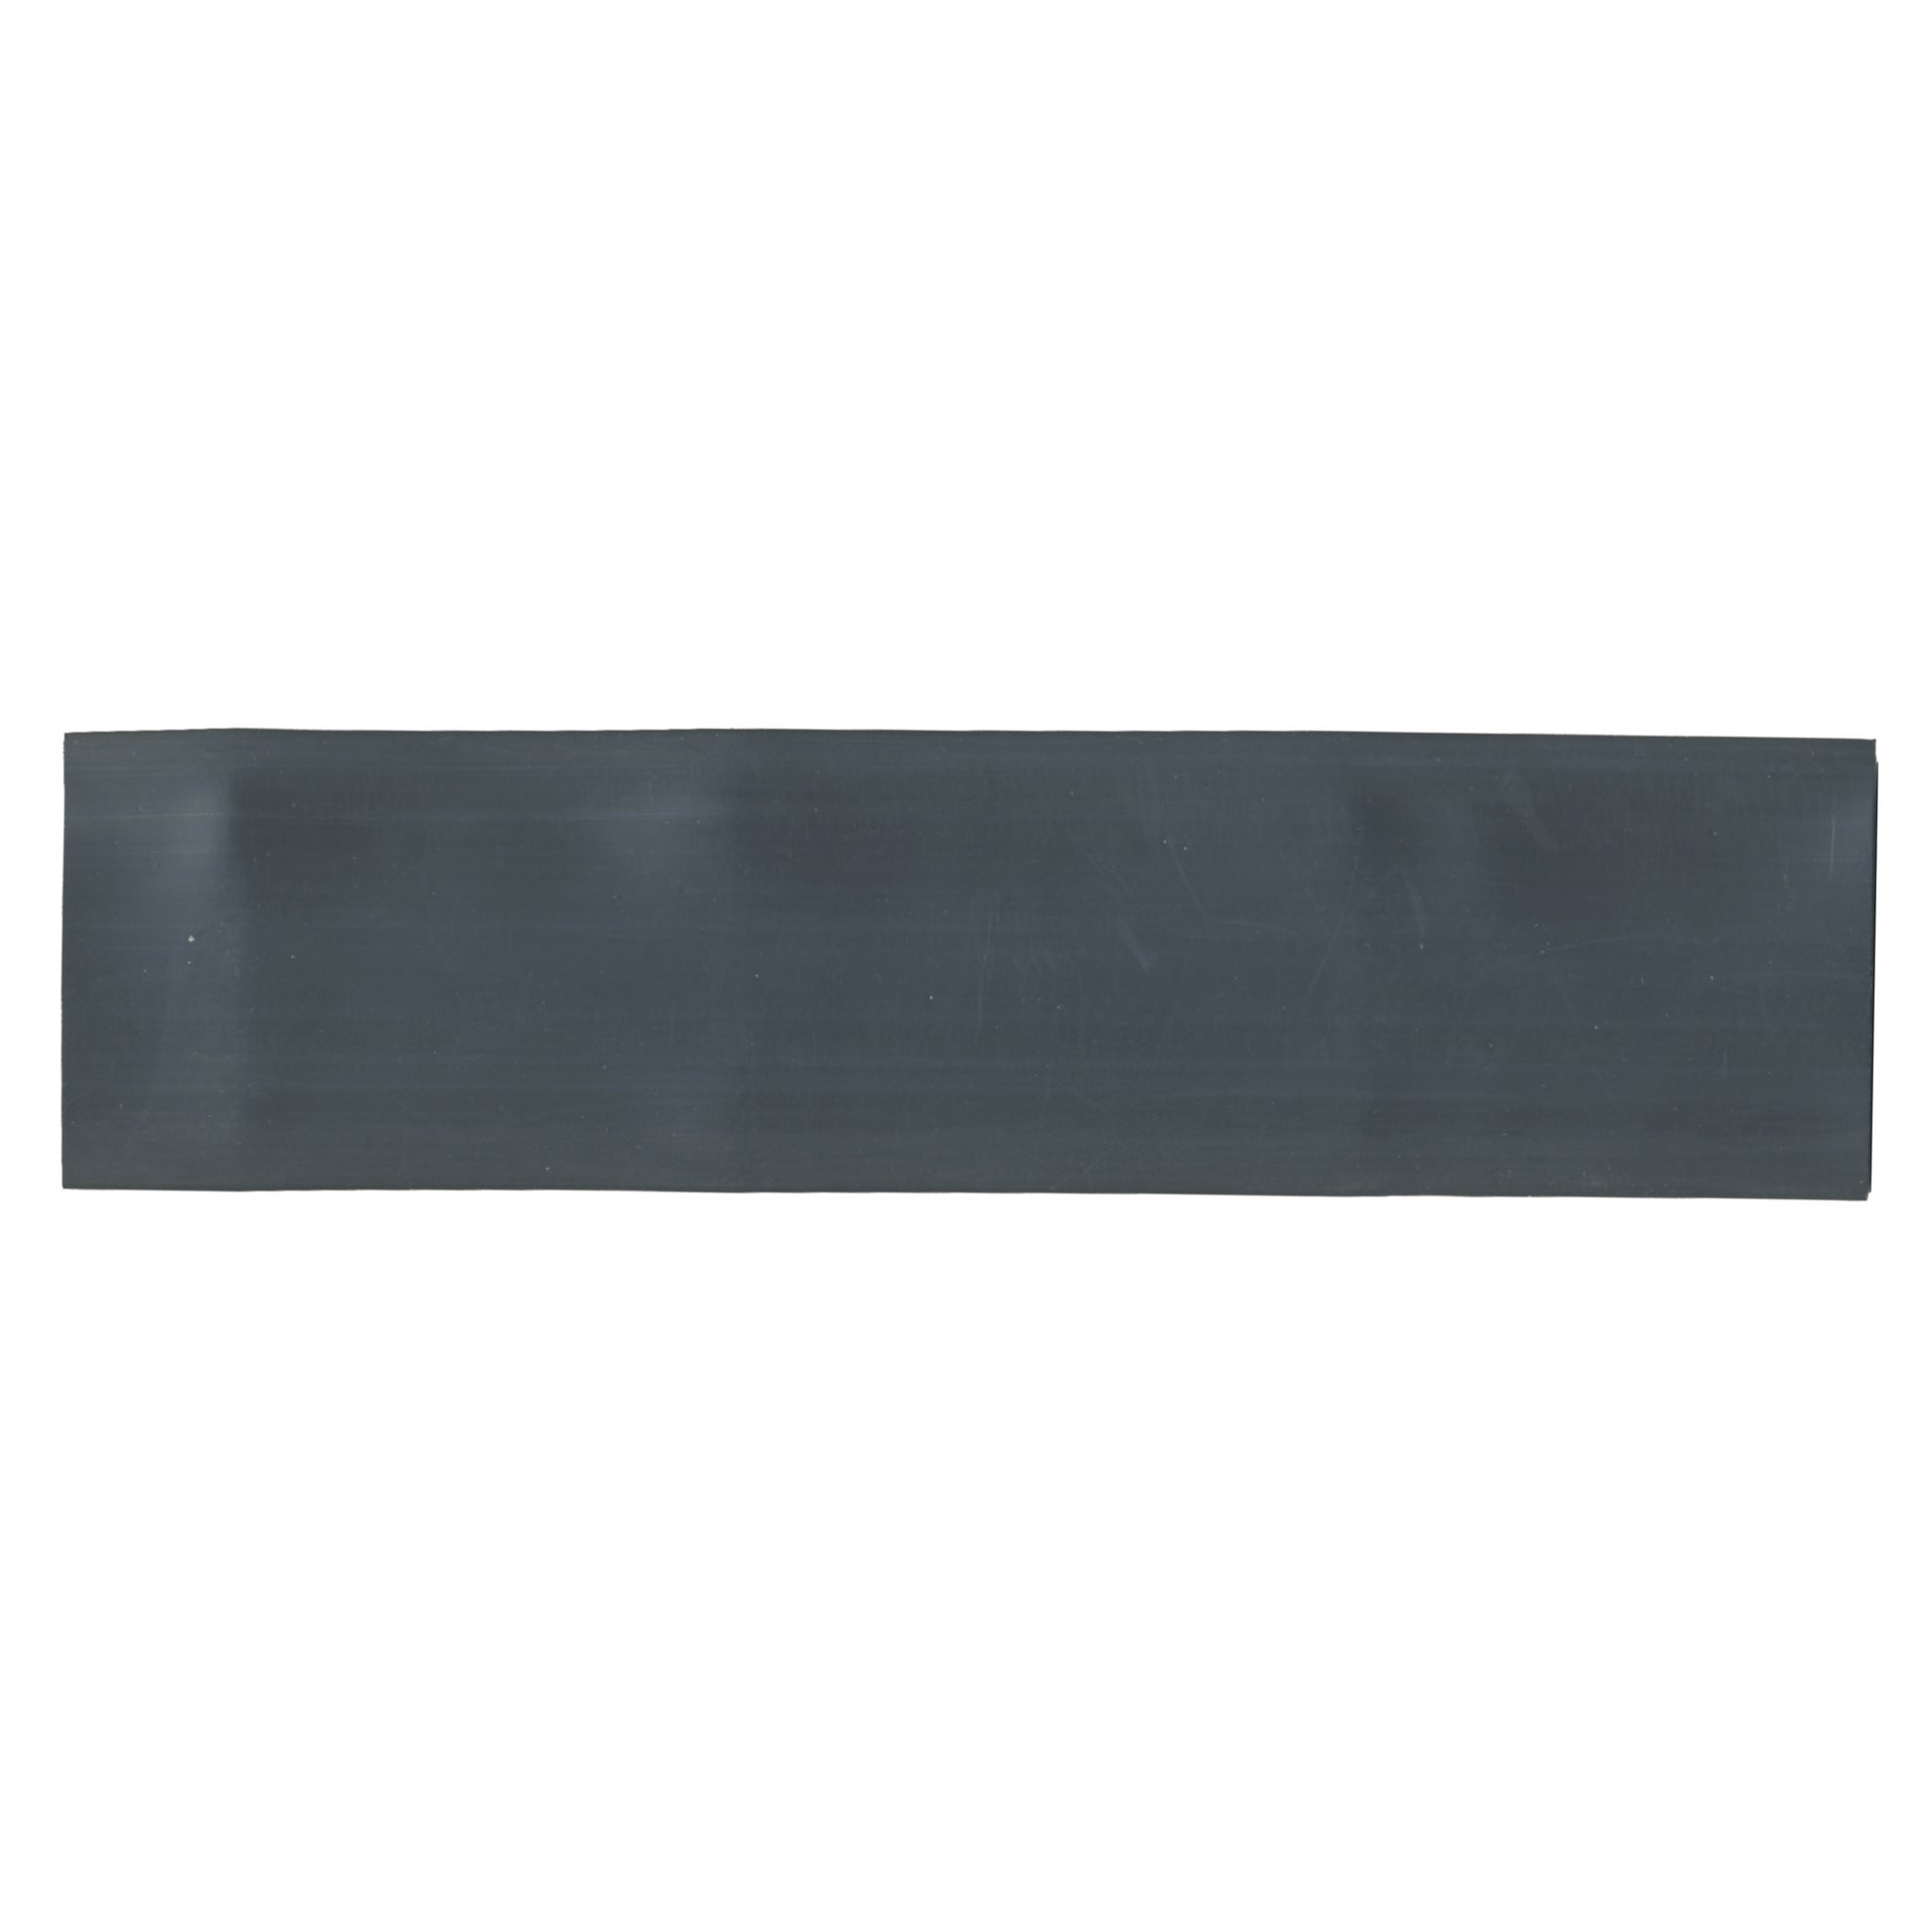 Flexible Thin Single Wall Non-Adhesive Heat Shrink Tubing 2:1 Black 1" ID - 48" Inch 4 Pack